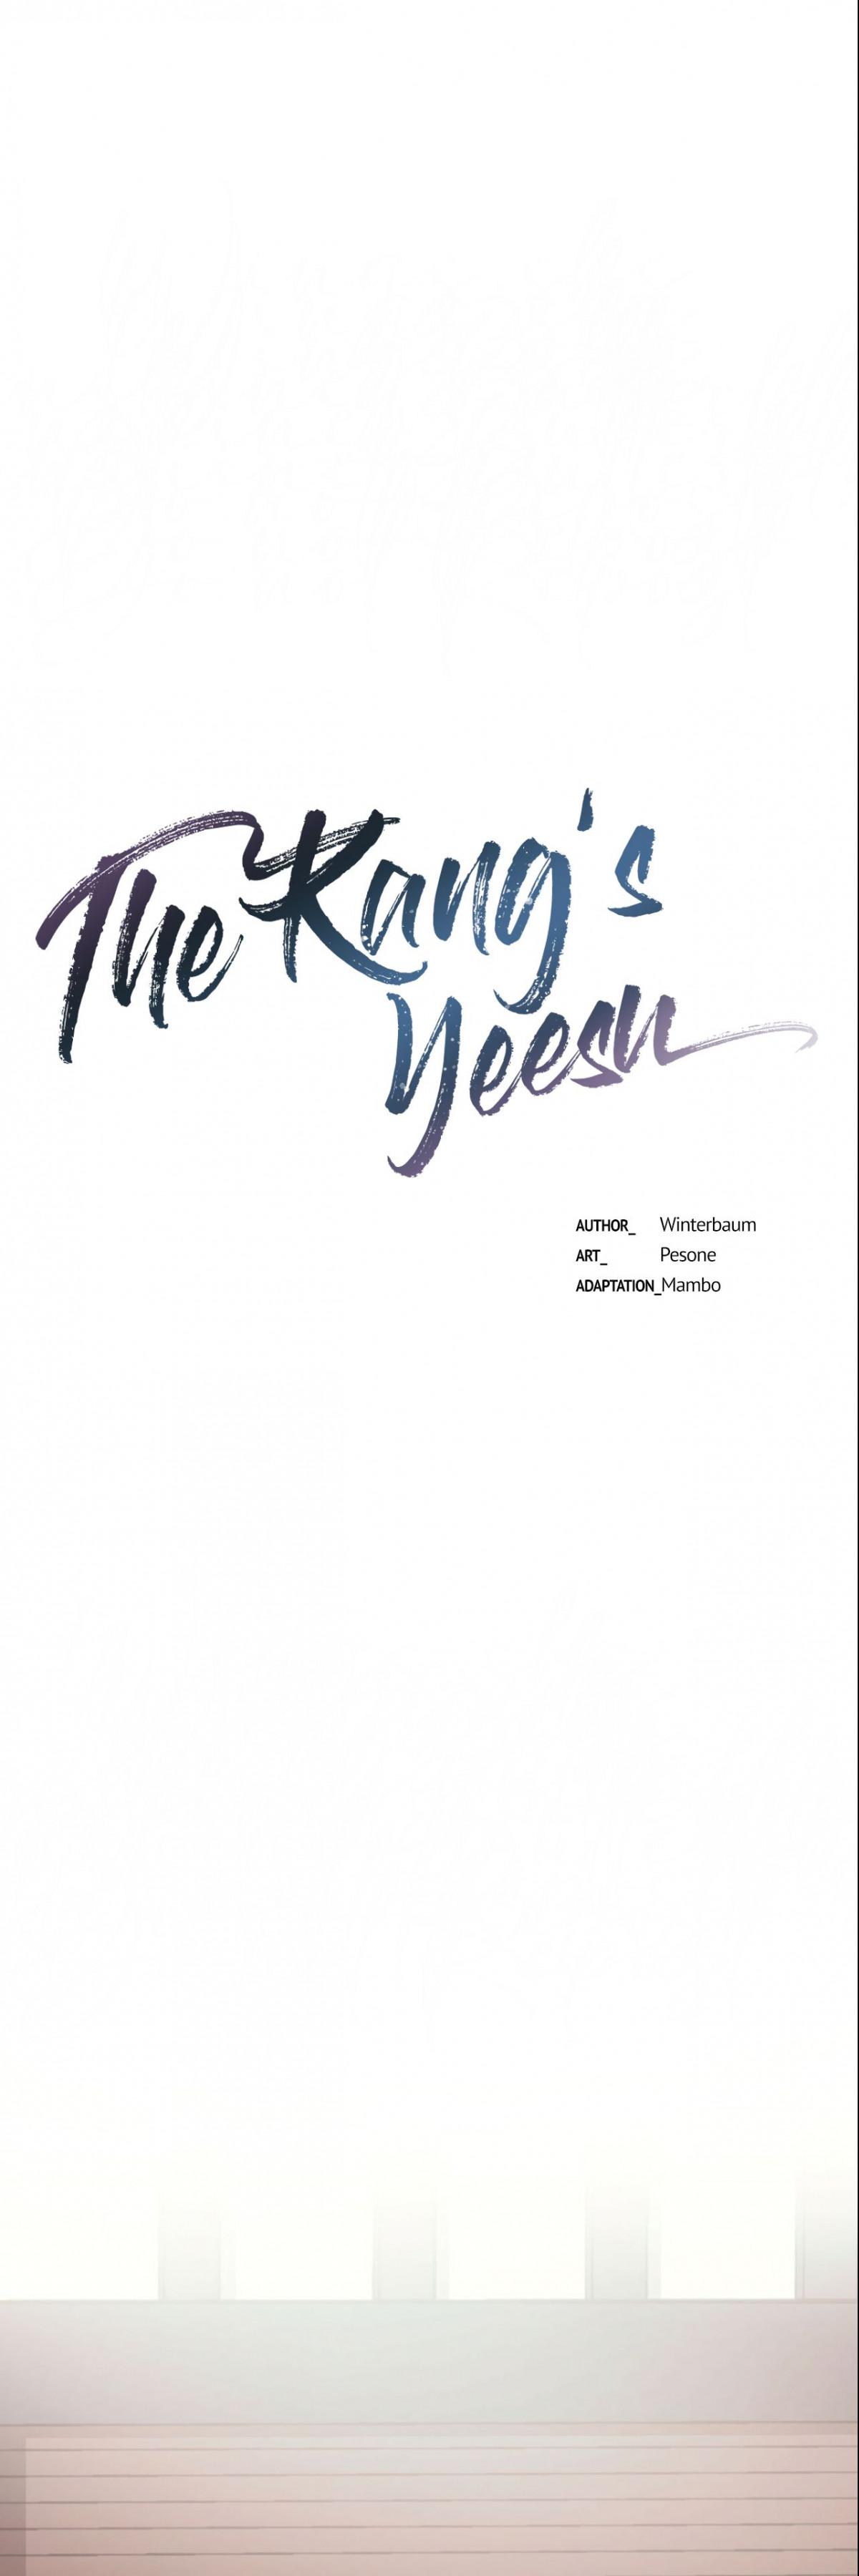 The Kang’S Yeesu - Page 1